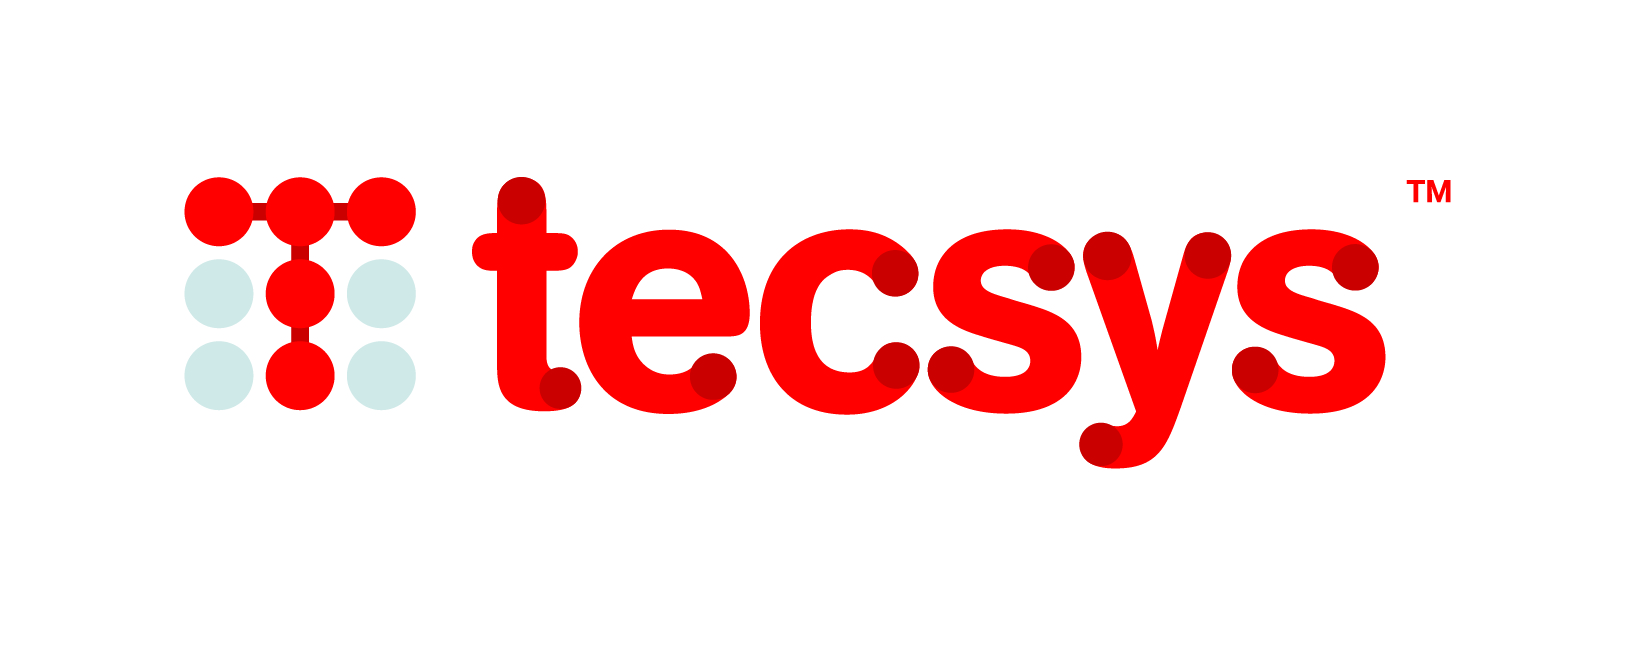 Tecsys-Red-Logo-CMYK-TM.jpg